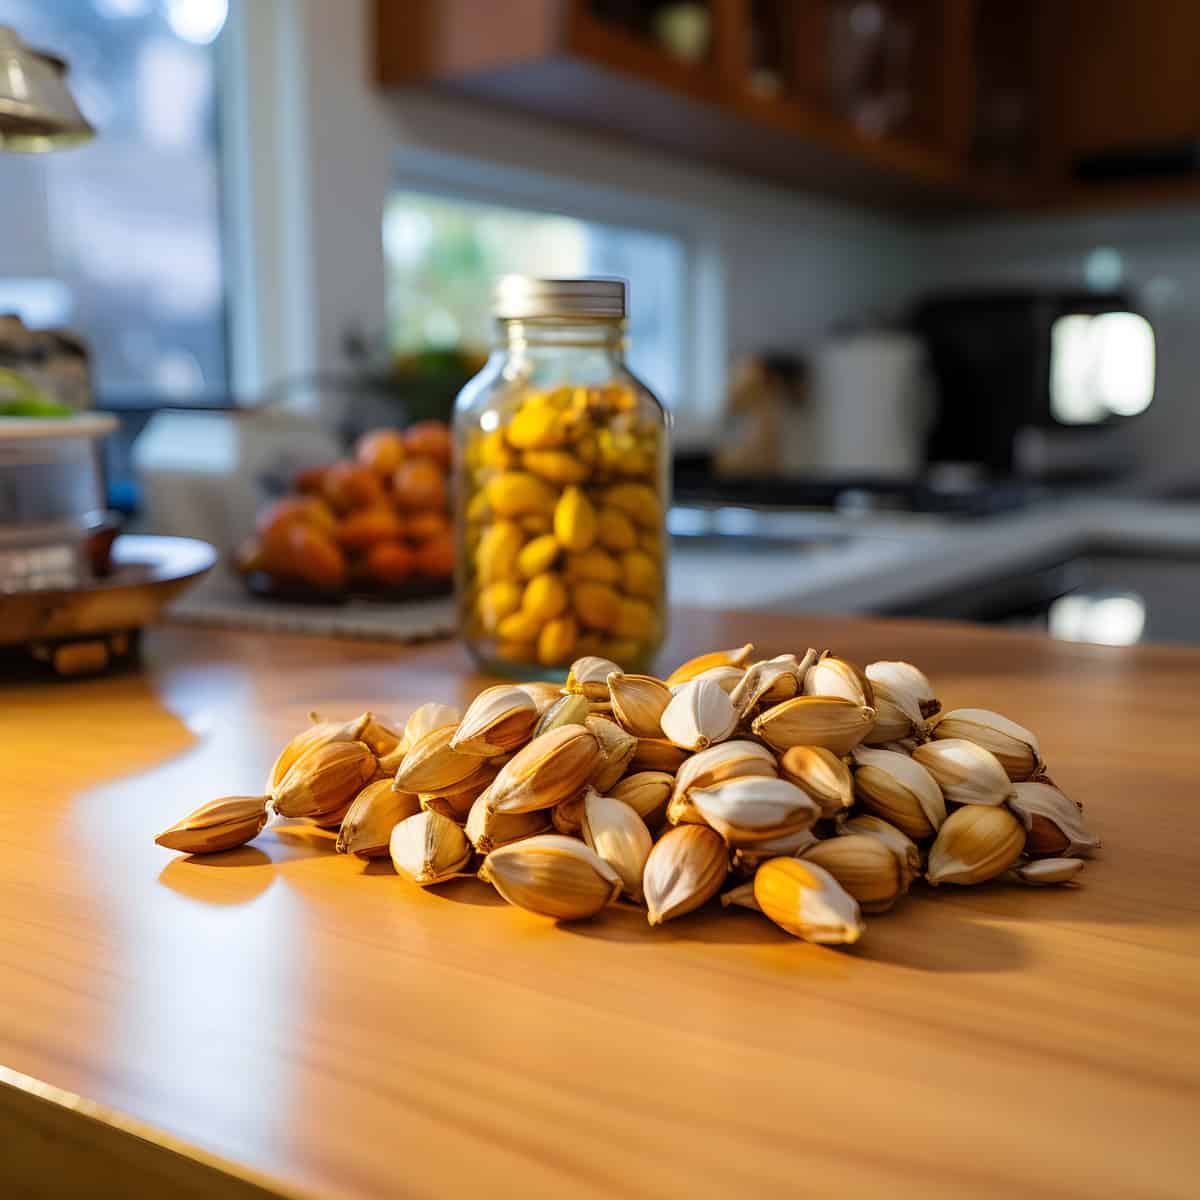 Jackfruit Seeds on a kitchen counter